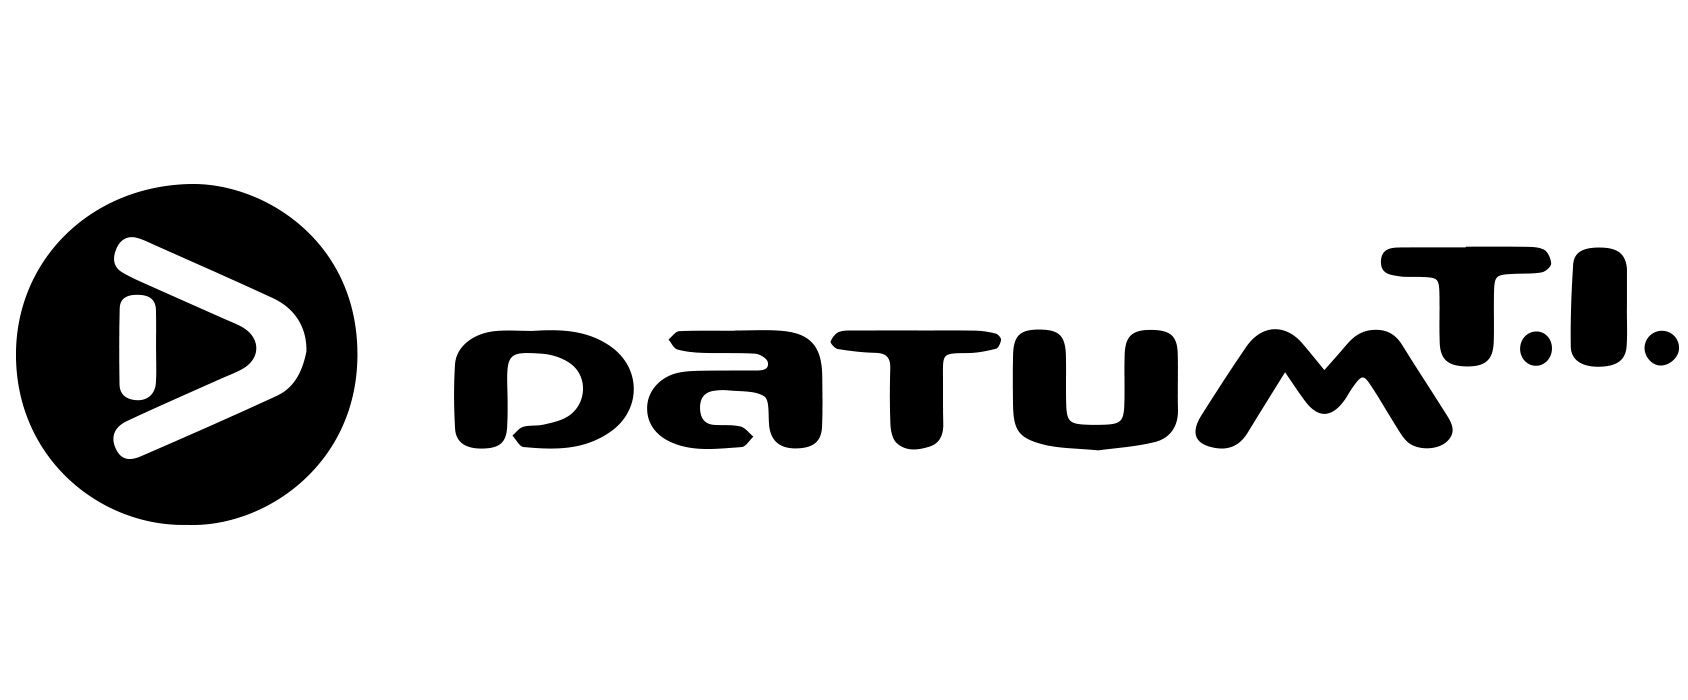 Logomarca 176.png